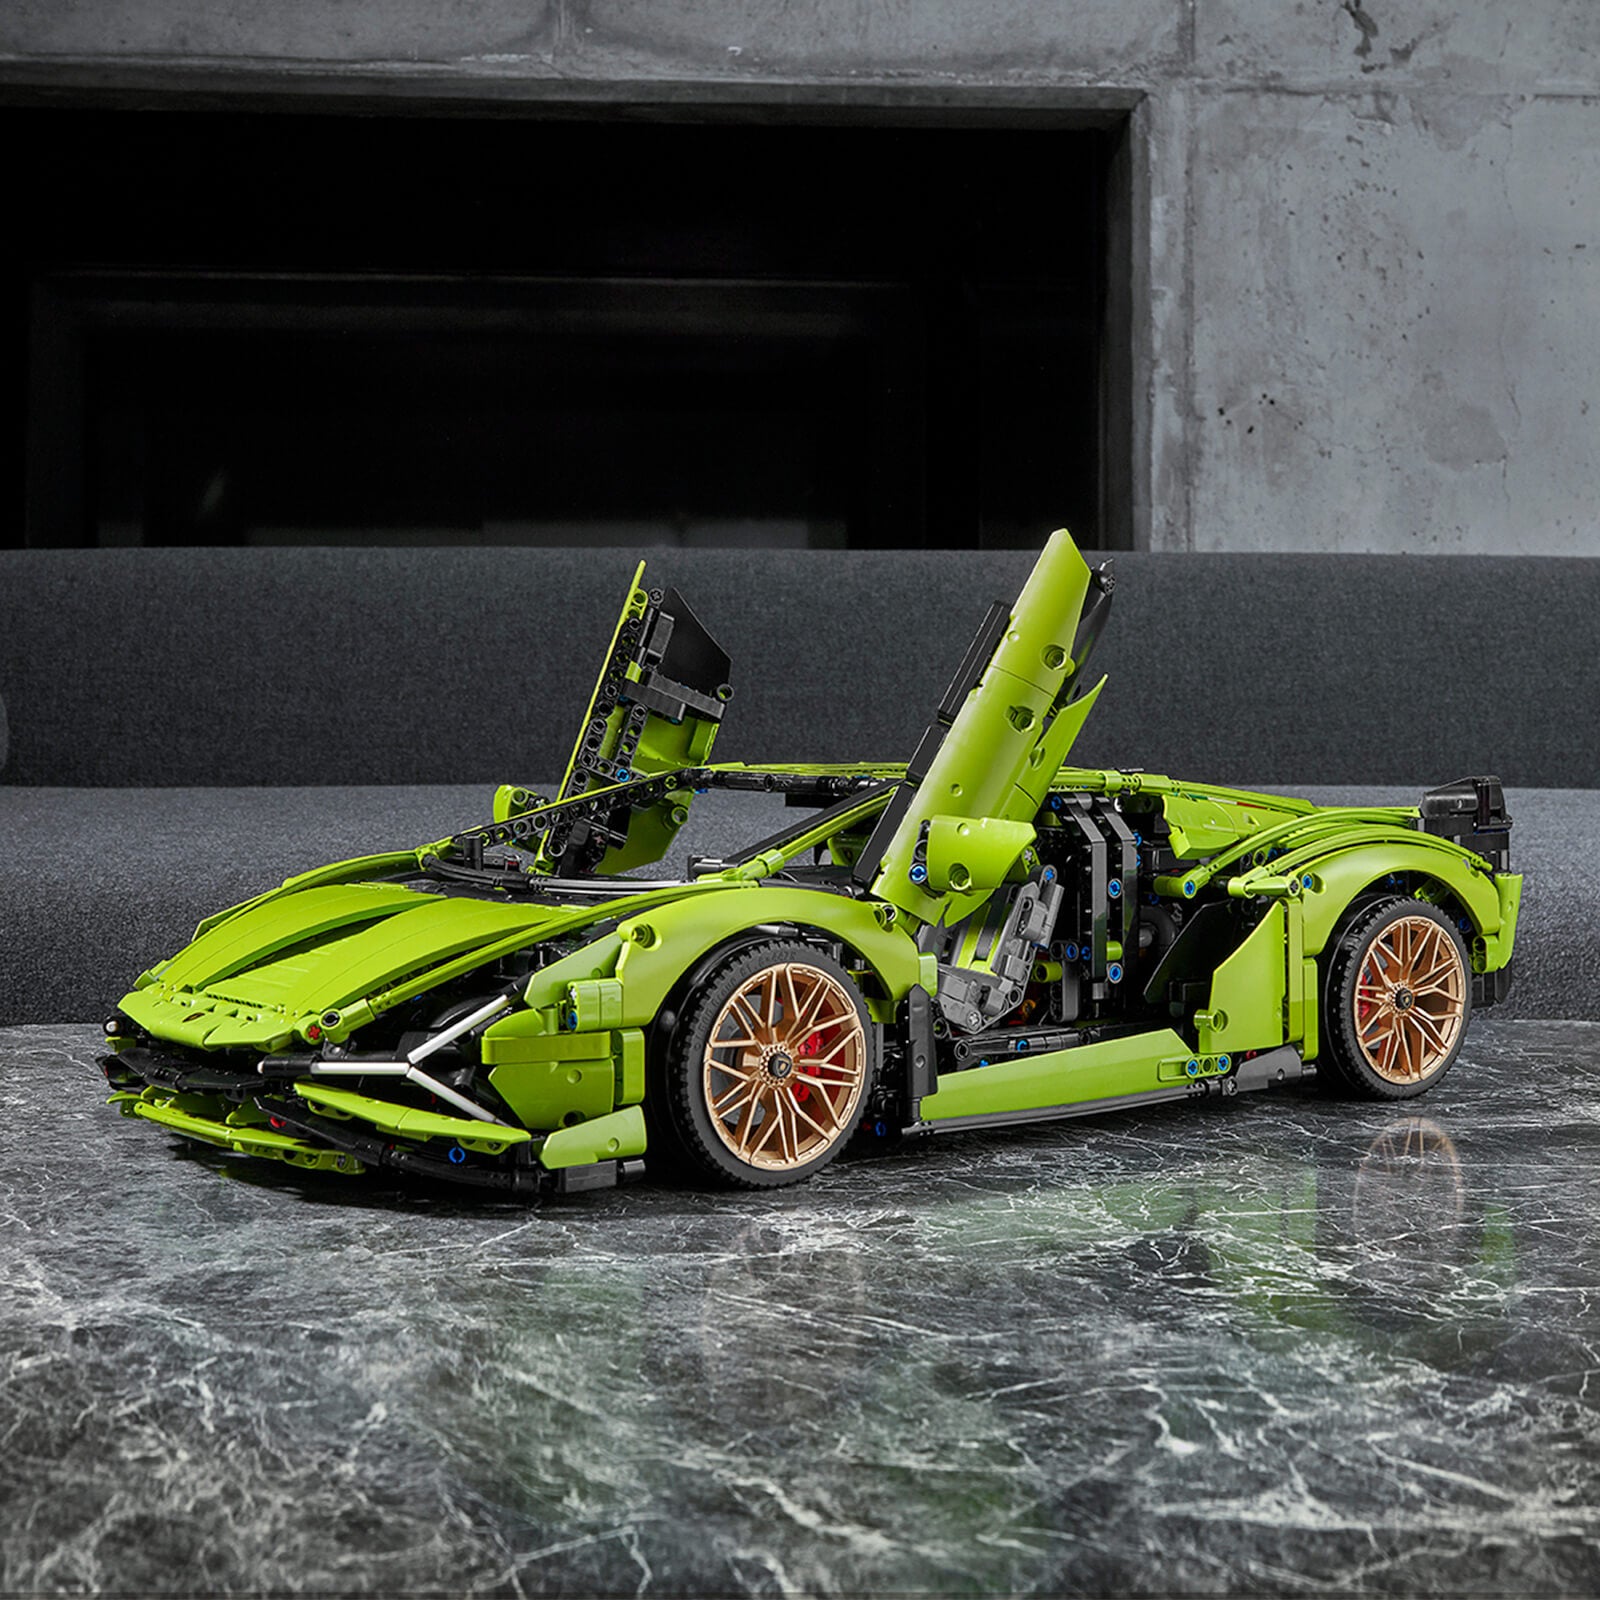 LEGO Lamborghini Sian FKP 37 Technic (42115) - NEW IN BOX, Factory Sealed.